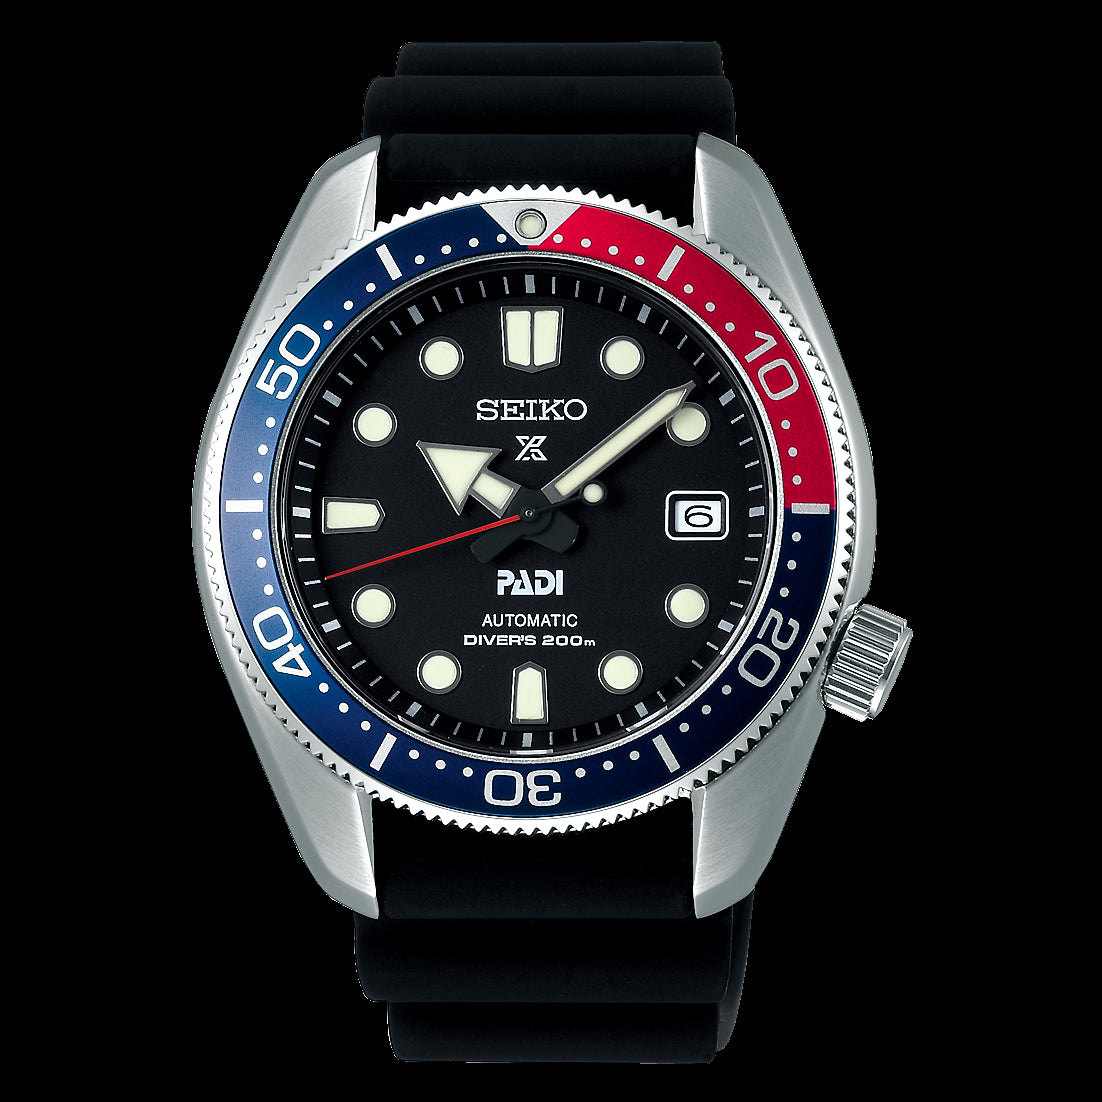 The Seiko Prospex PADI SPB087 Dive Watch